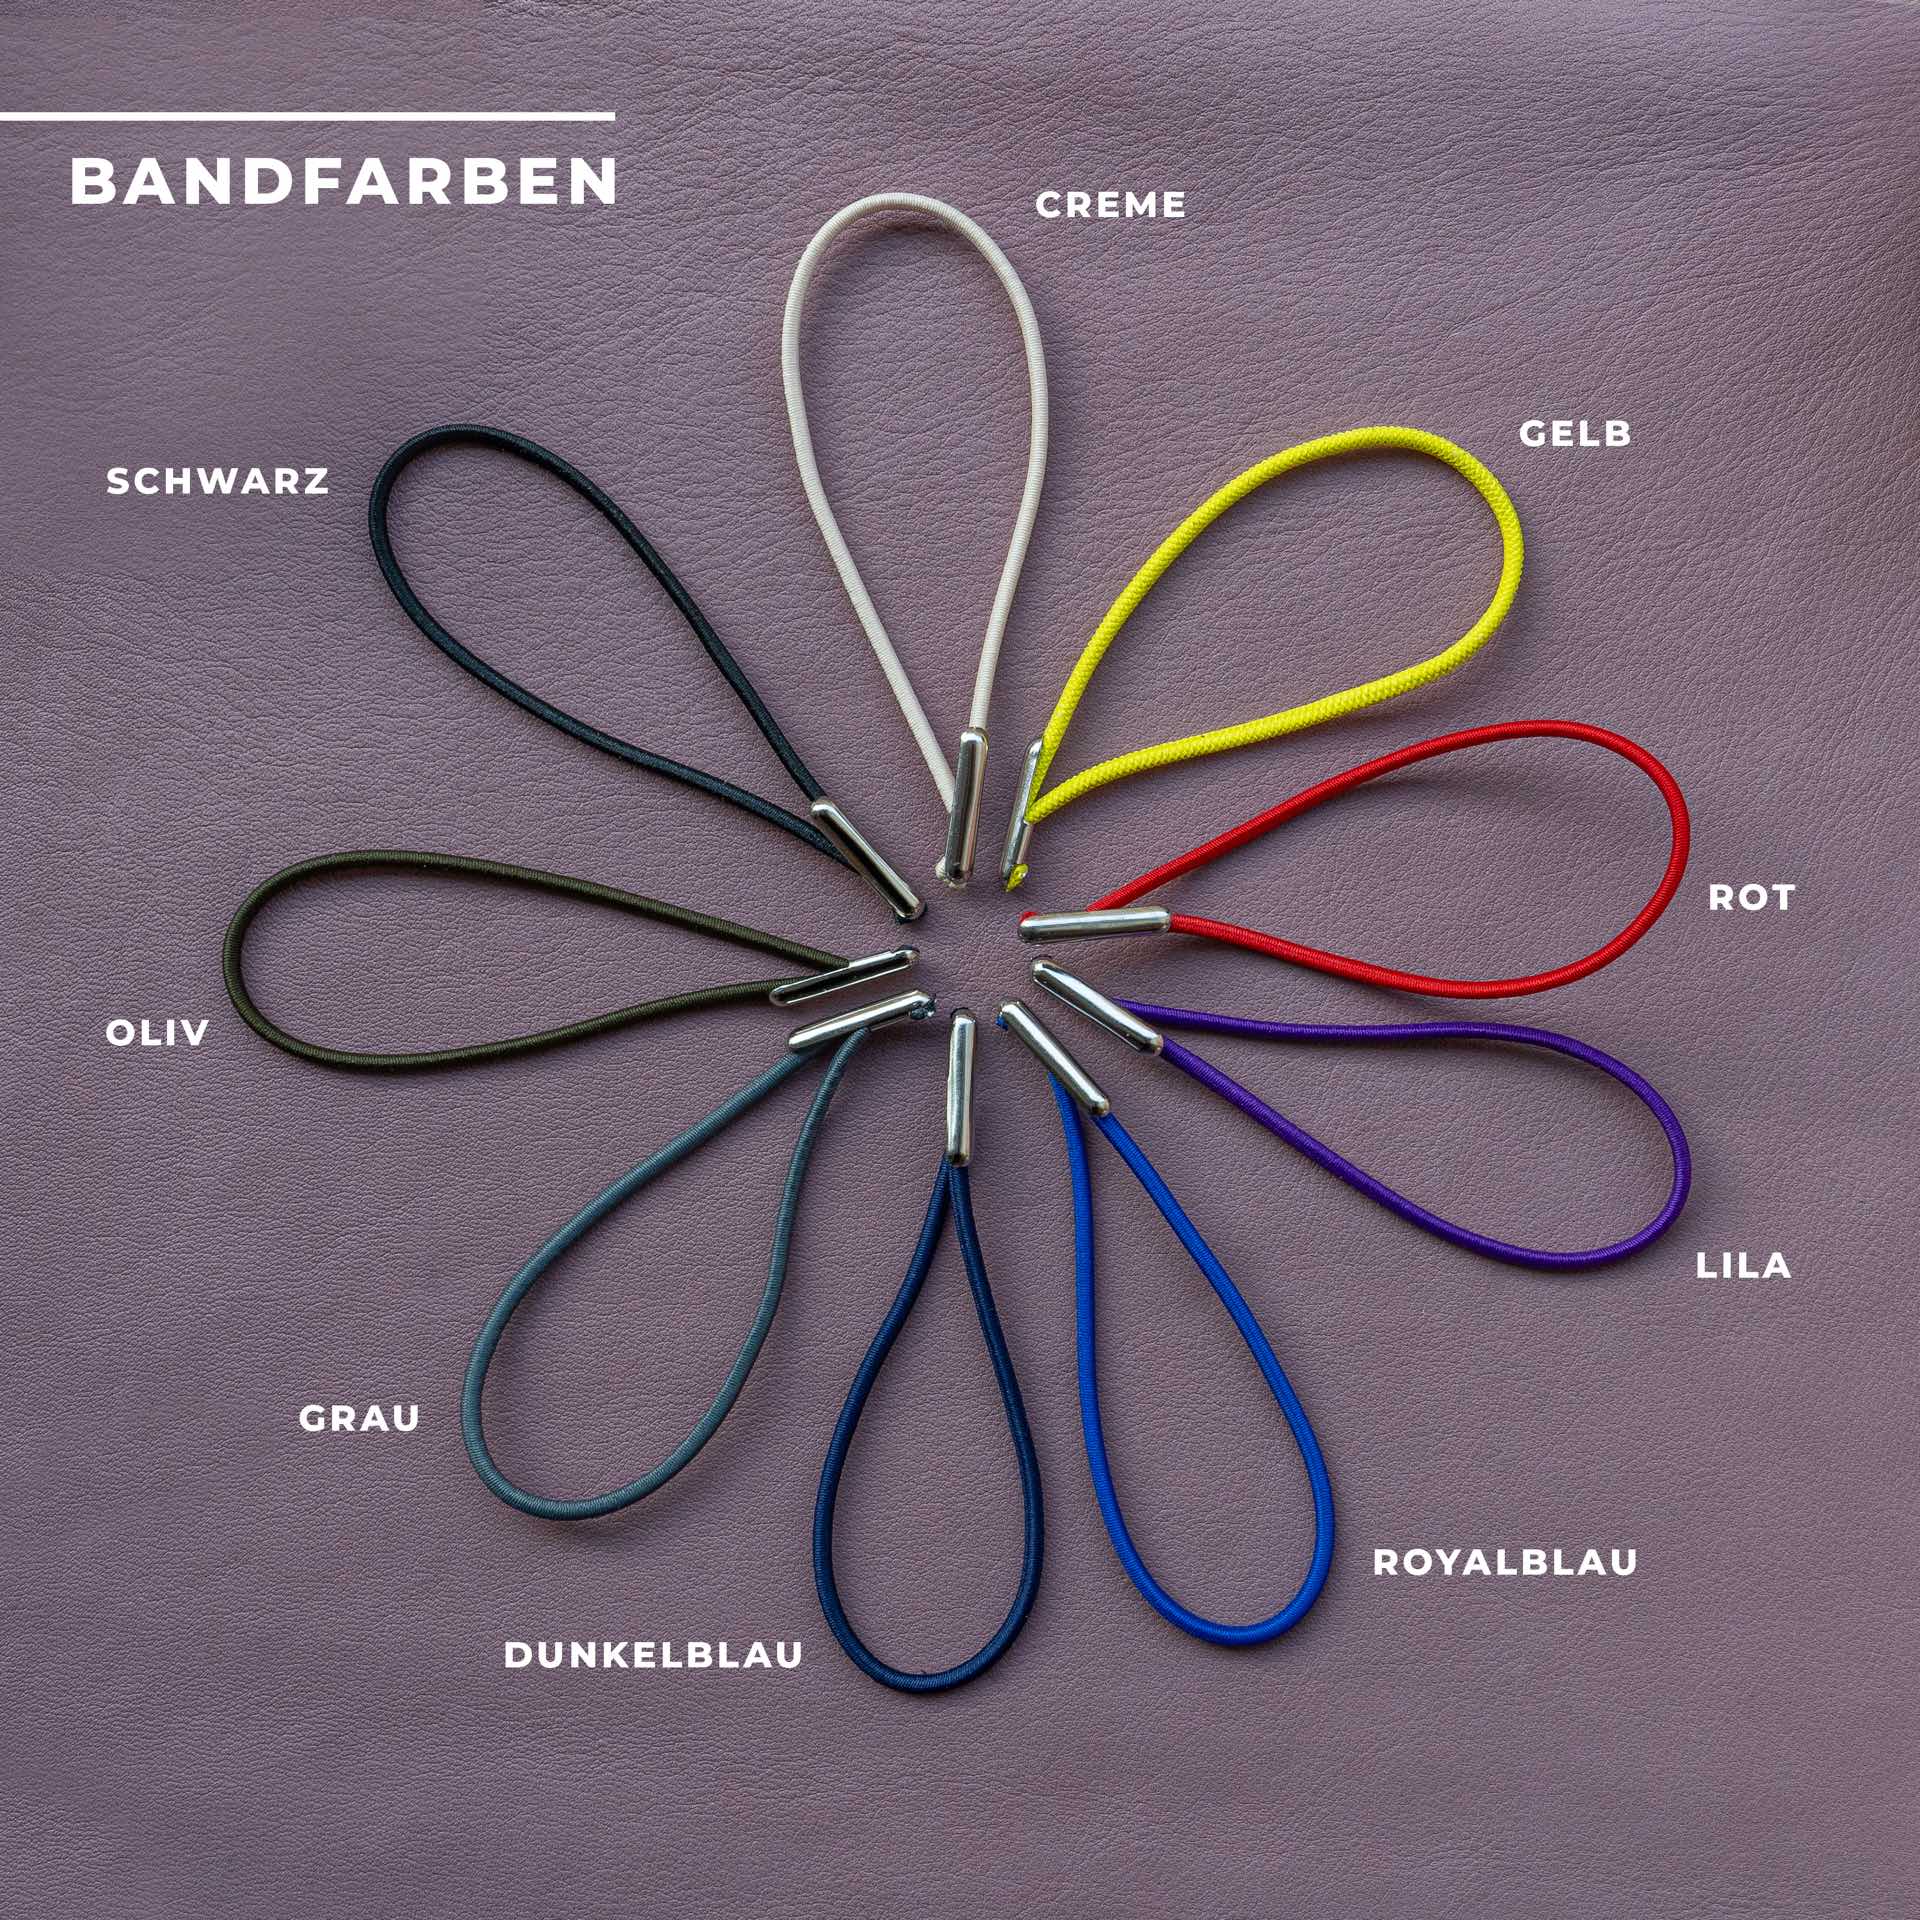 Bandfarben-Franziska-Klee-flieder-bandfarben